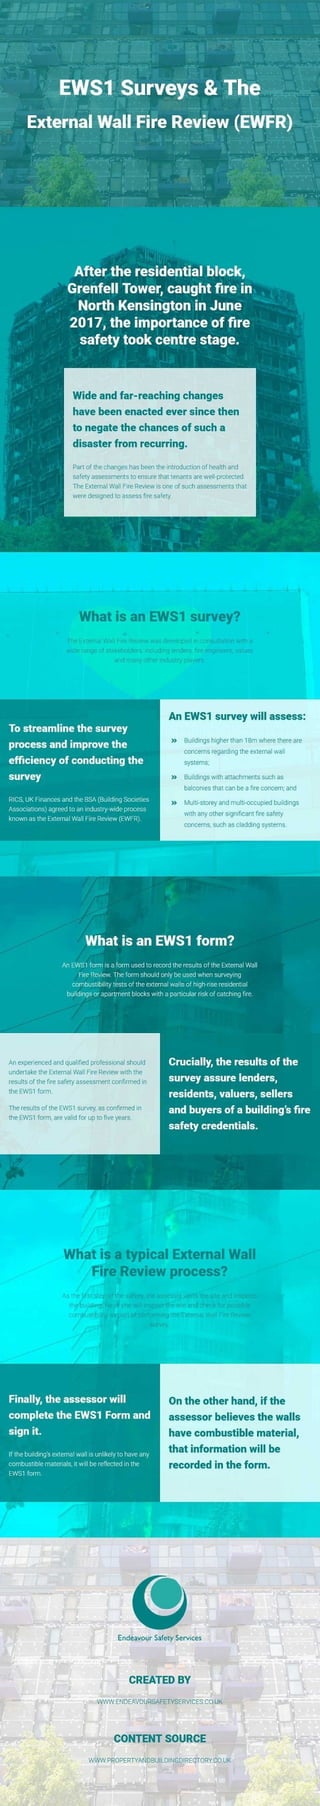 Ews1 surveys &amp; the external wall fire review (ewfr)